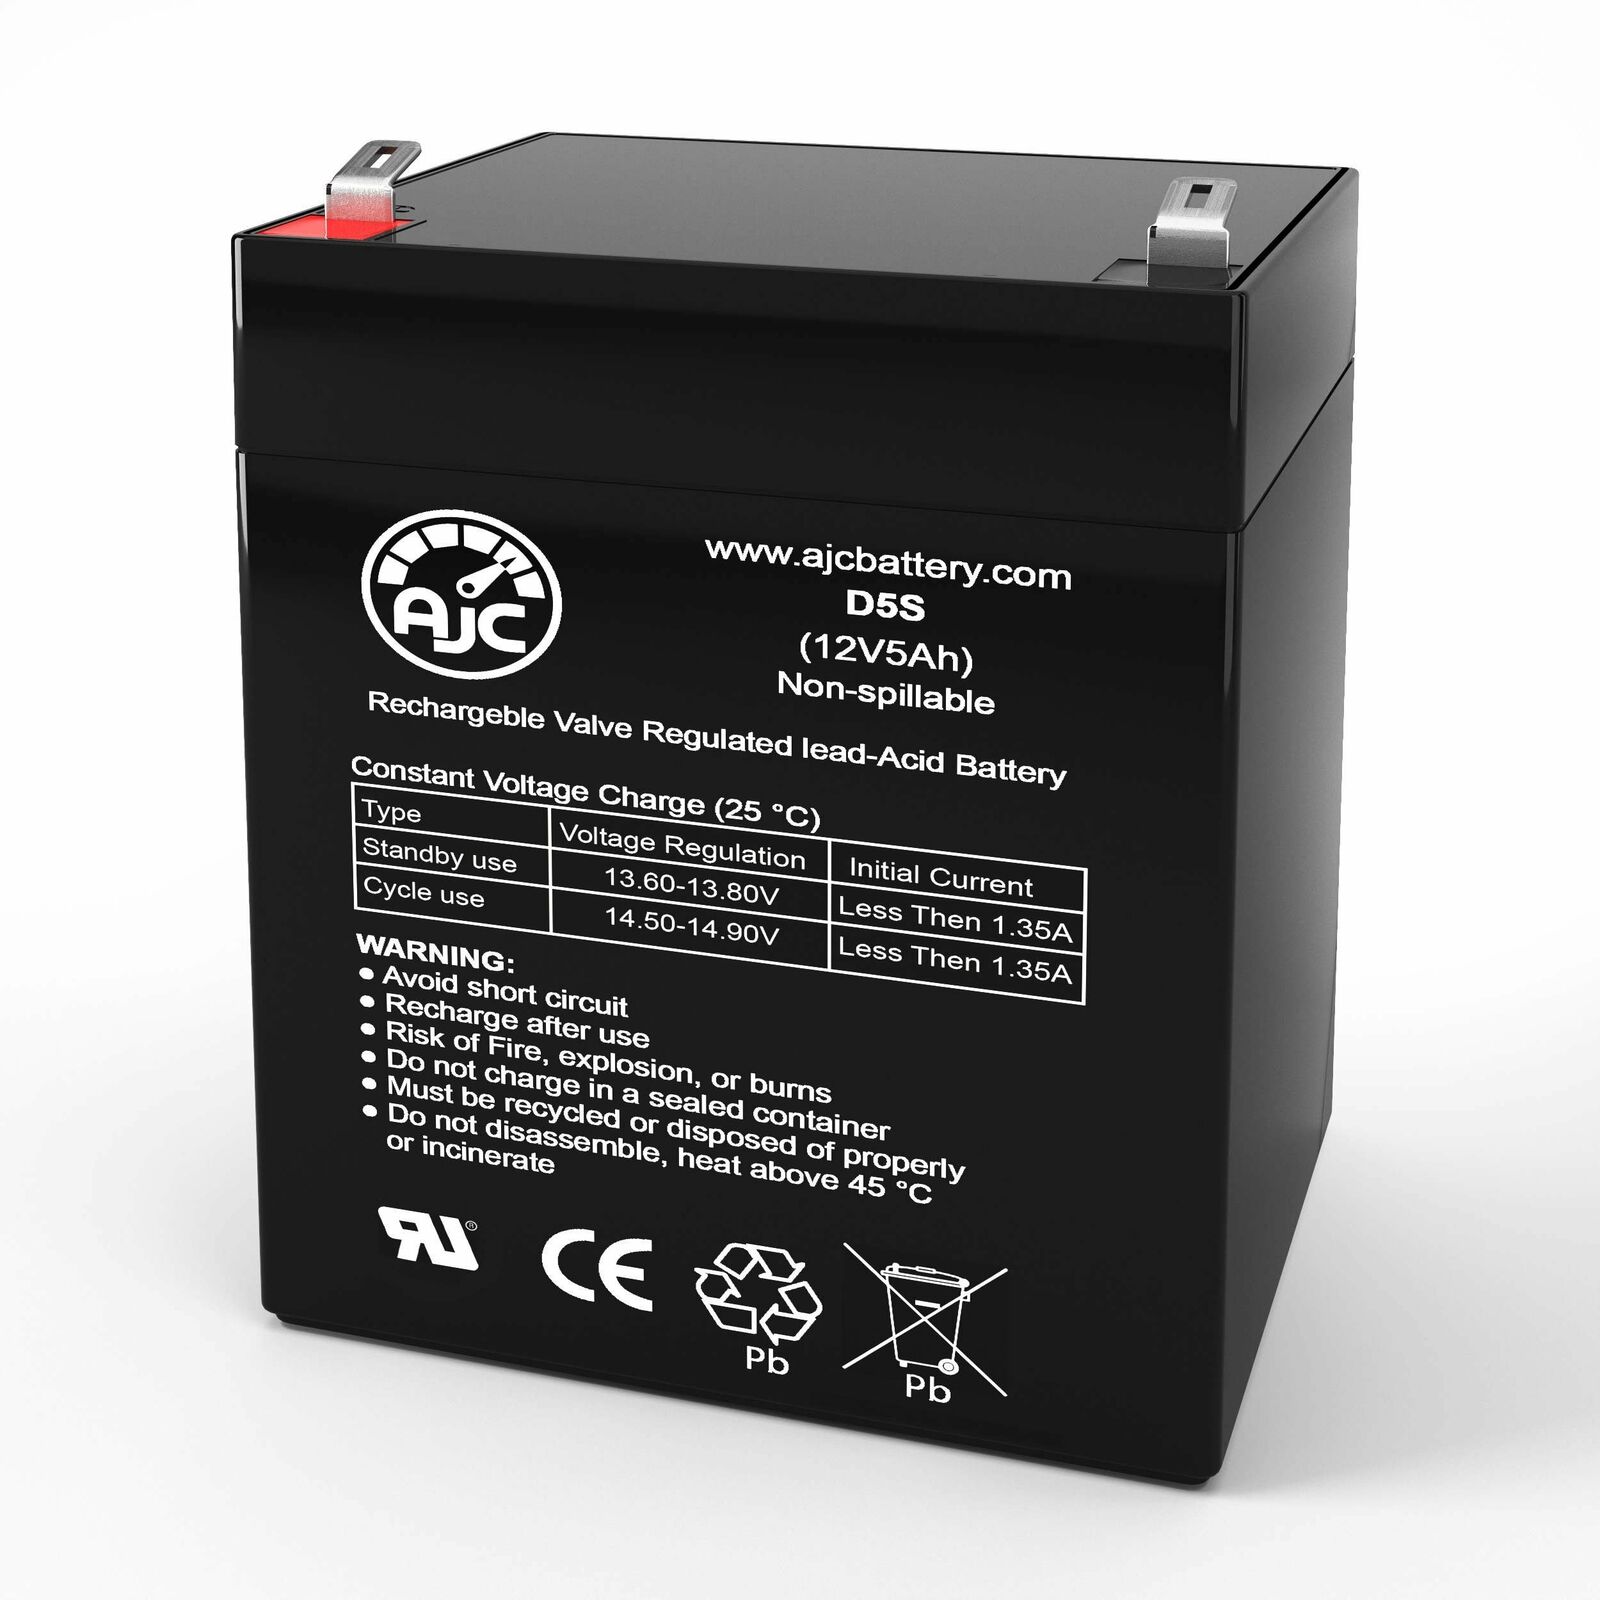 Eaton PoweWare PW3105 550 12V 5Ah UPS Replacement Battery